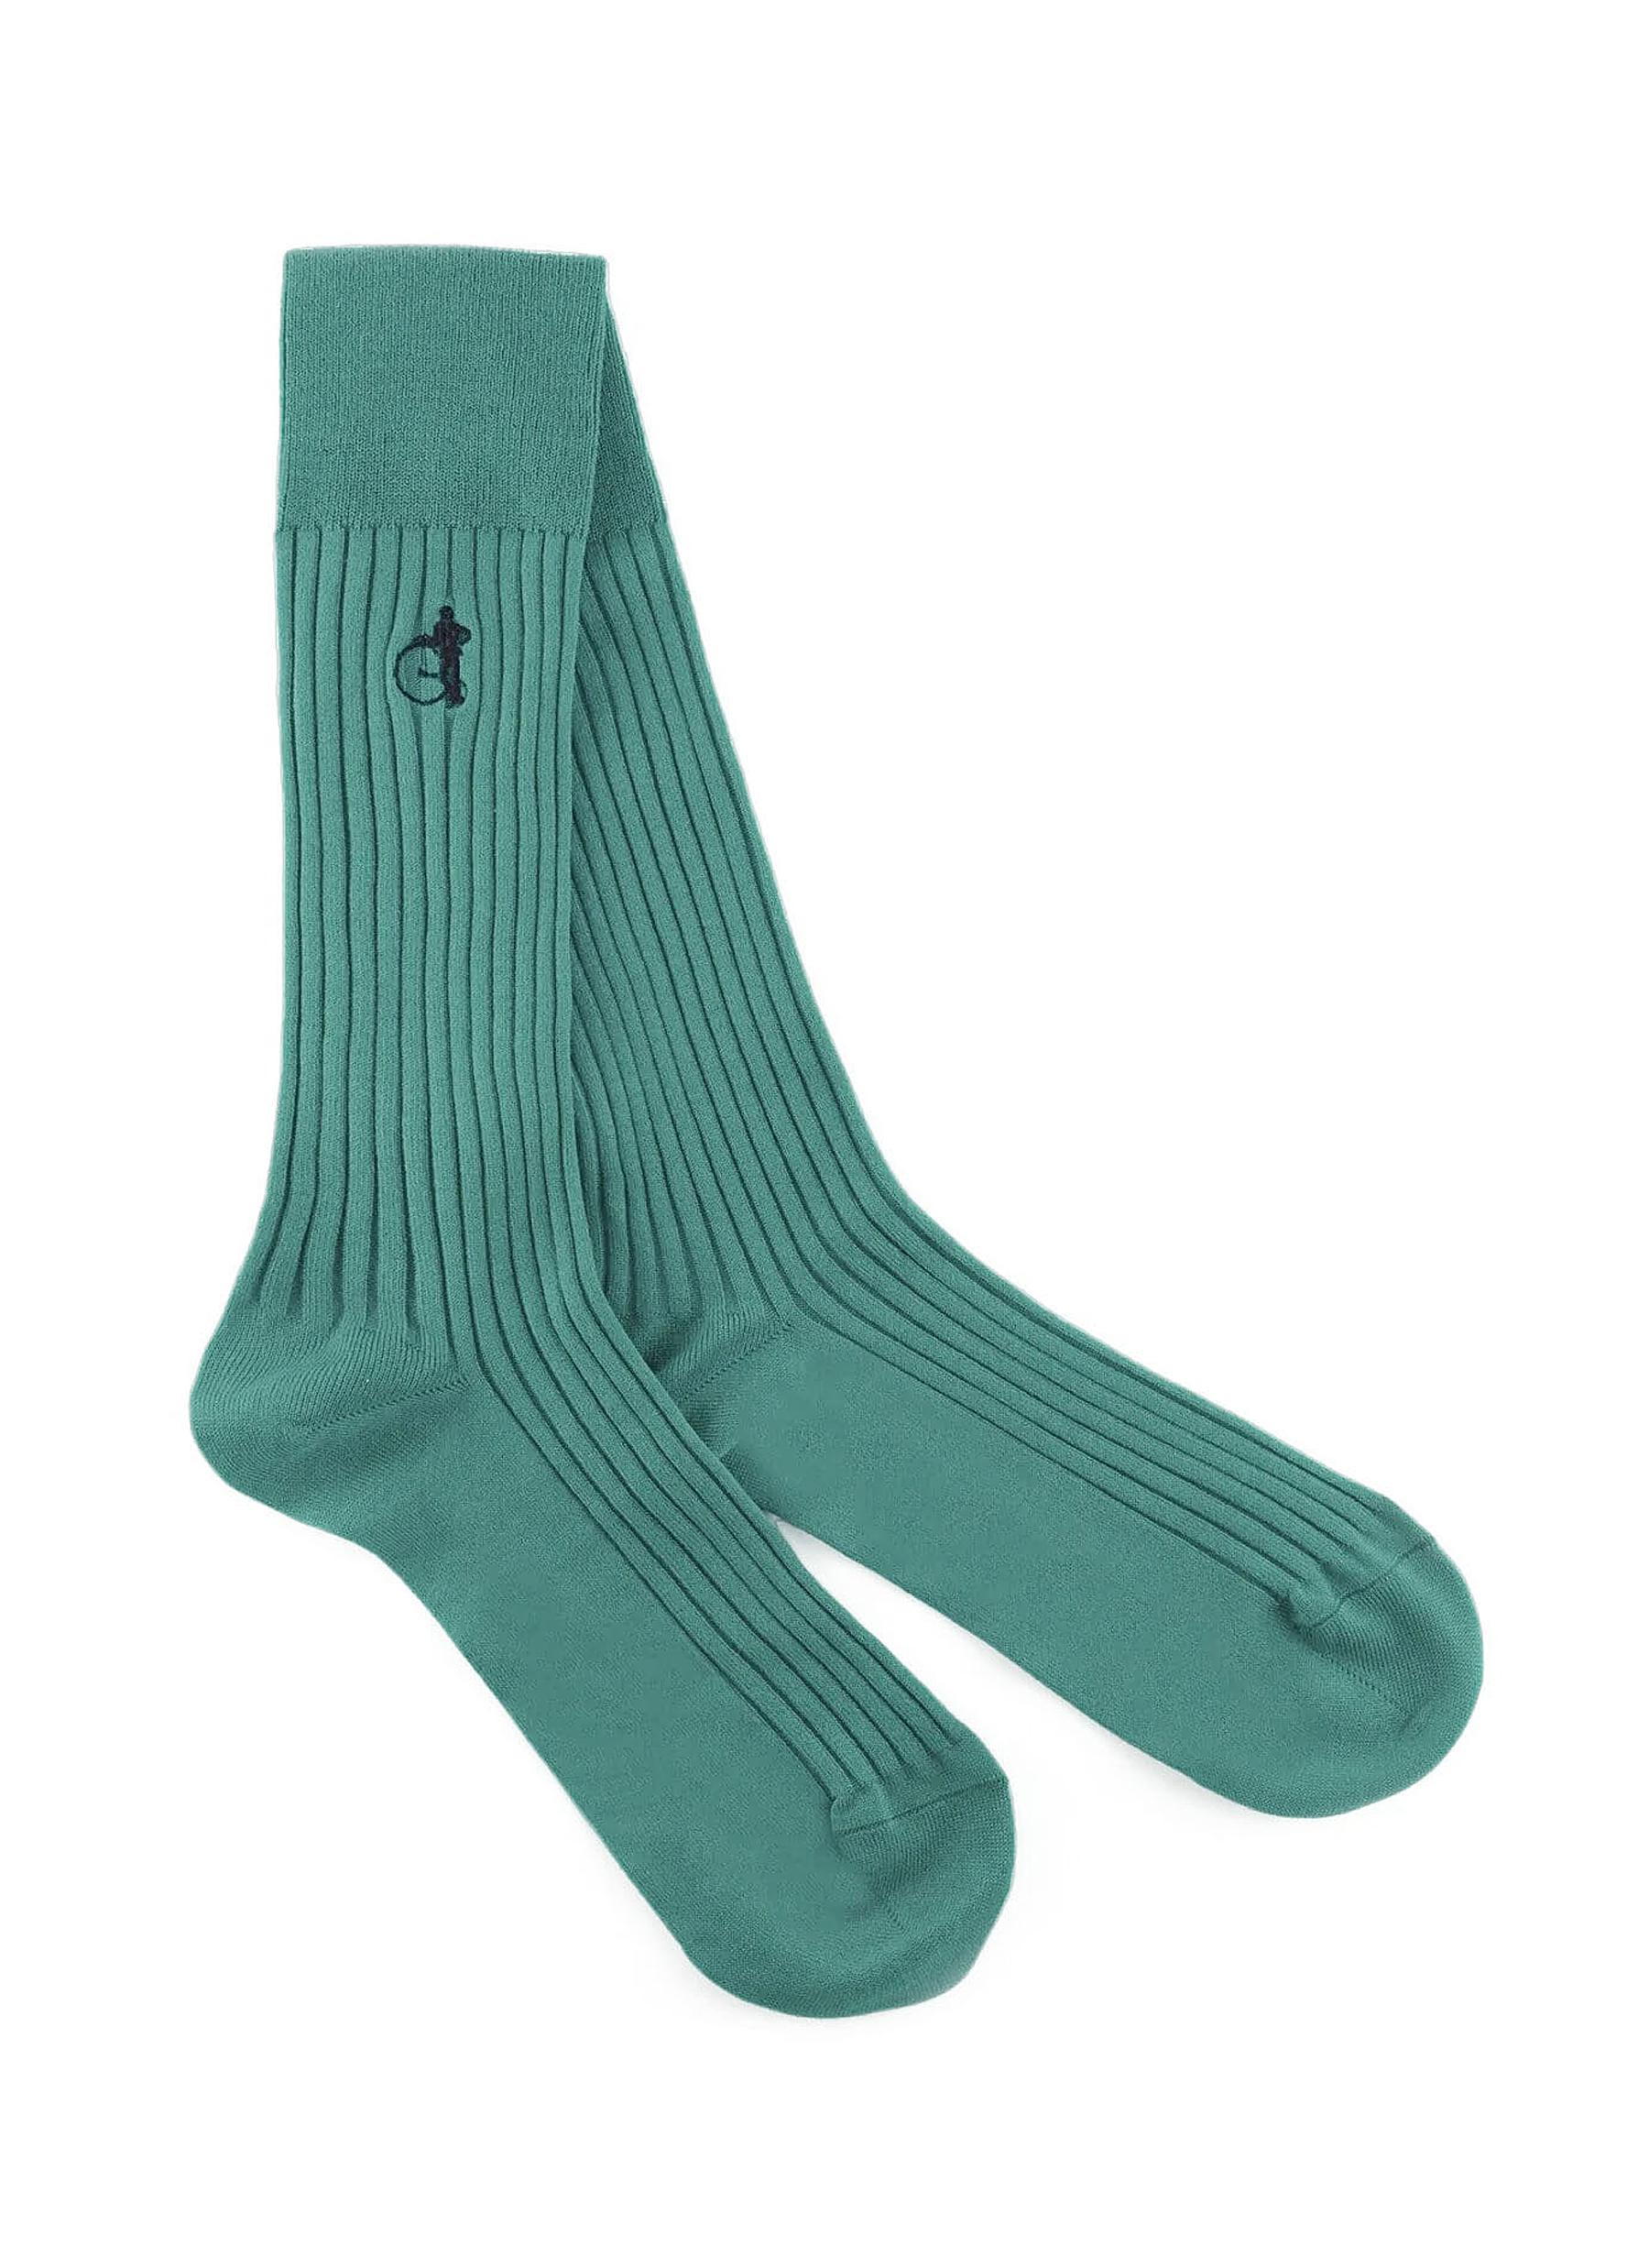 Simply Sartorial Mid-Calf Socks